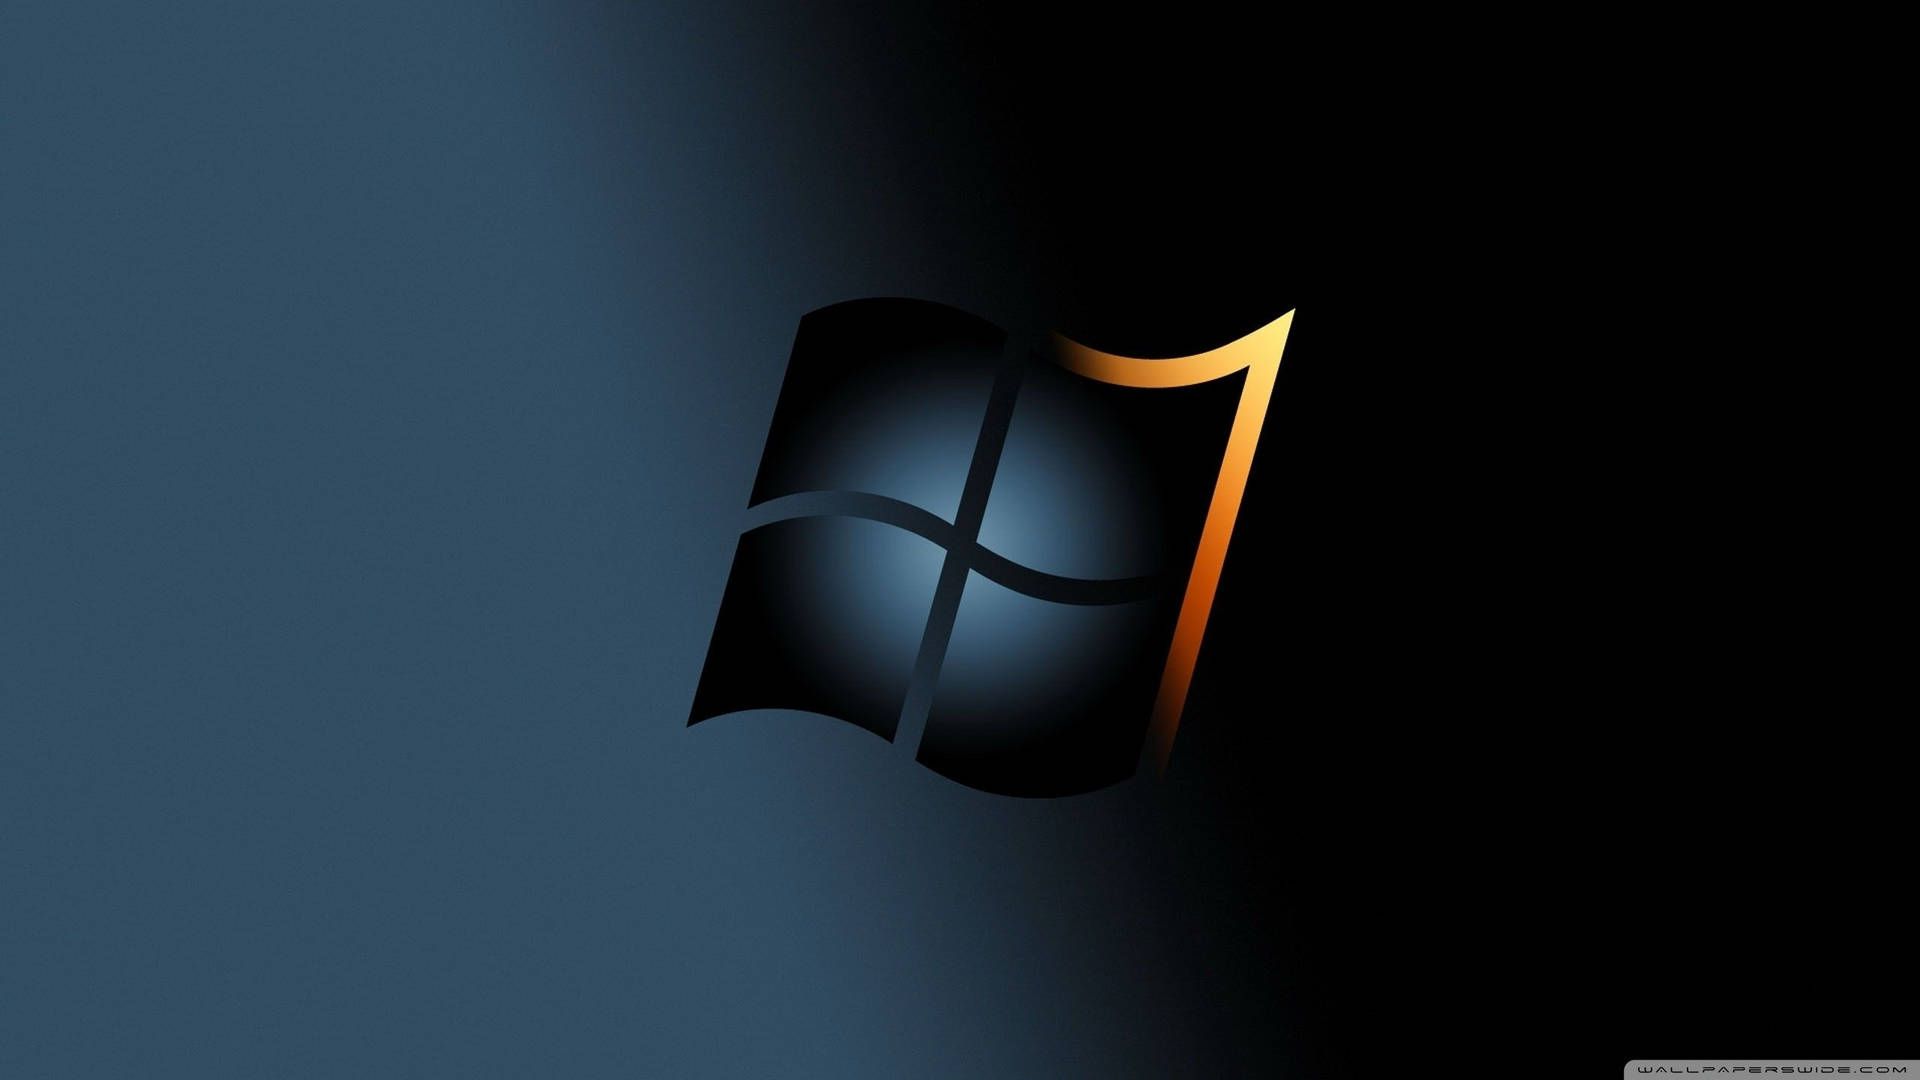  Windows 7 Hintergrundbild 1920x1080. Download Microsoft Windows 7 Logo Wallpaper